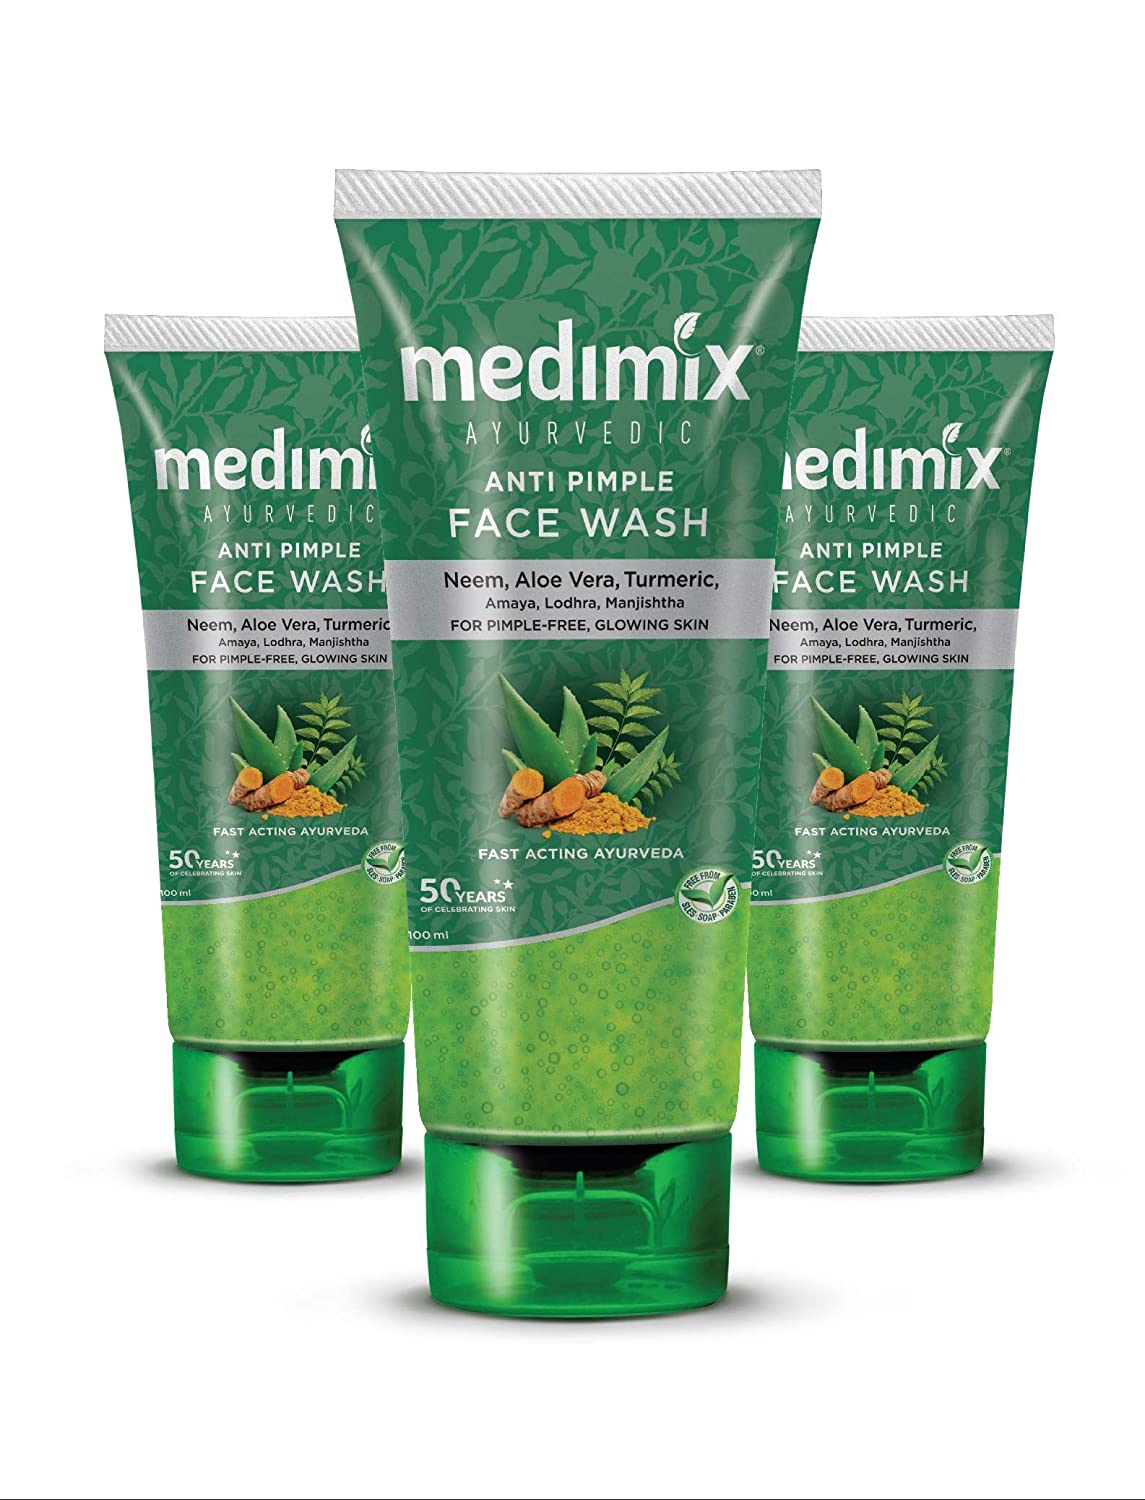 Is Medimix Anti-Face Wash Good?